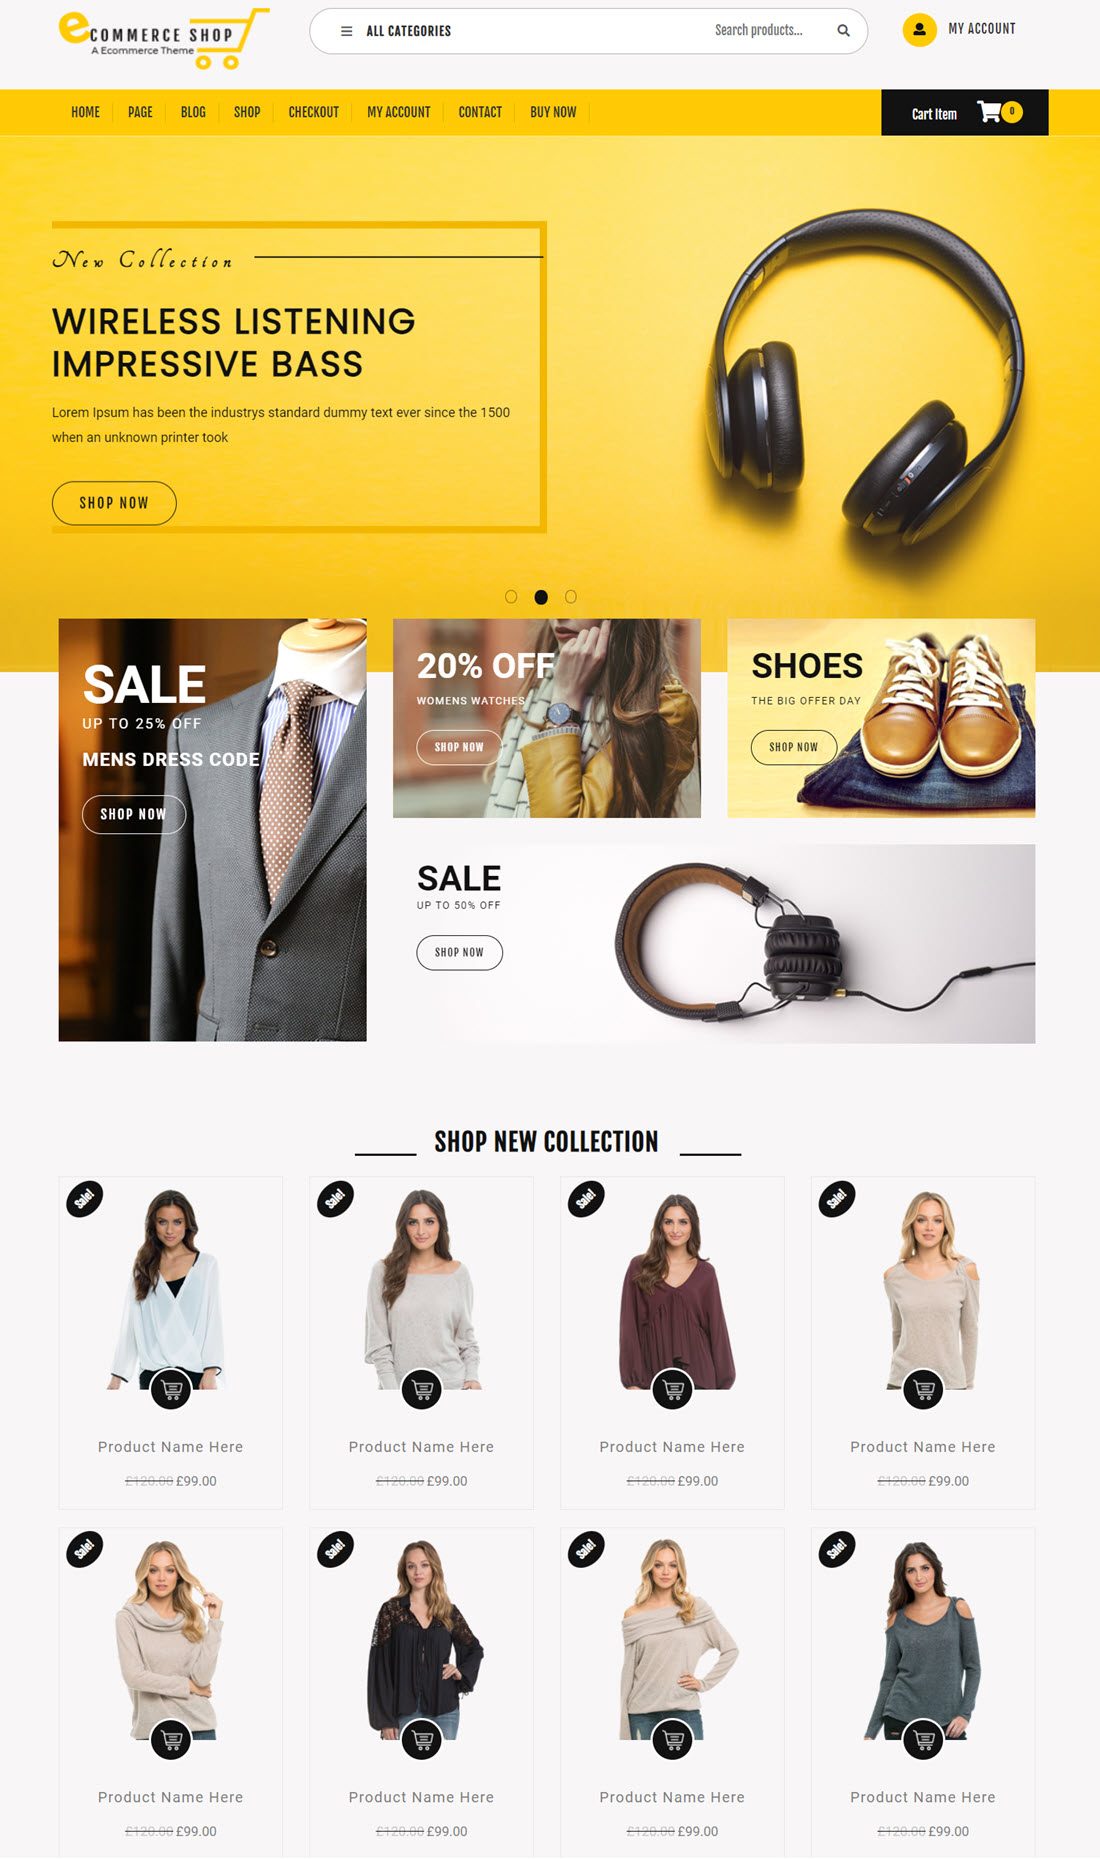 Ecommerce Shop Online Store Theme Screenshot